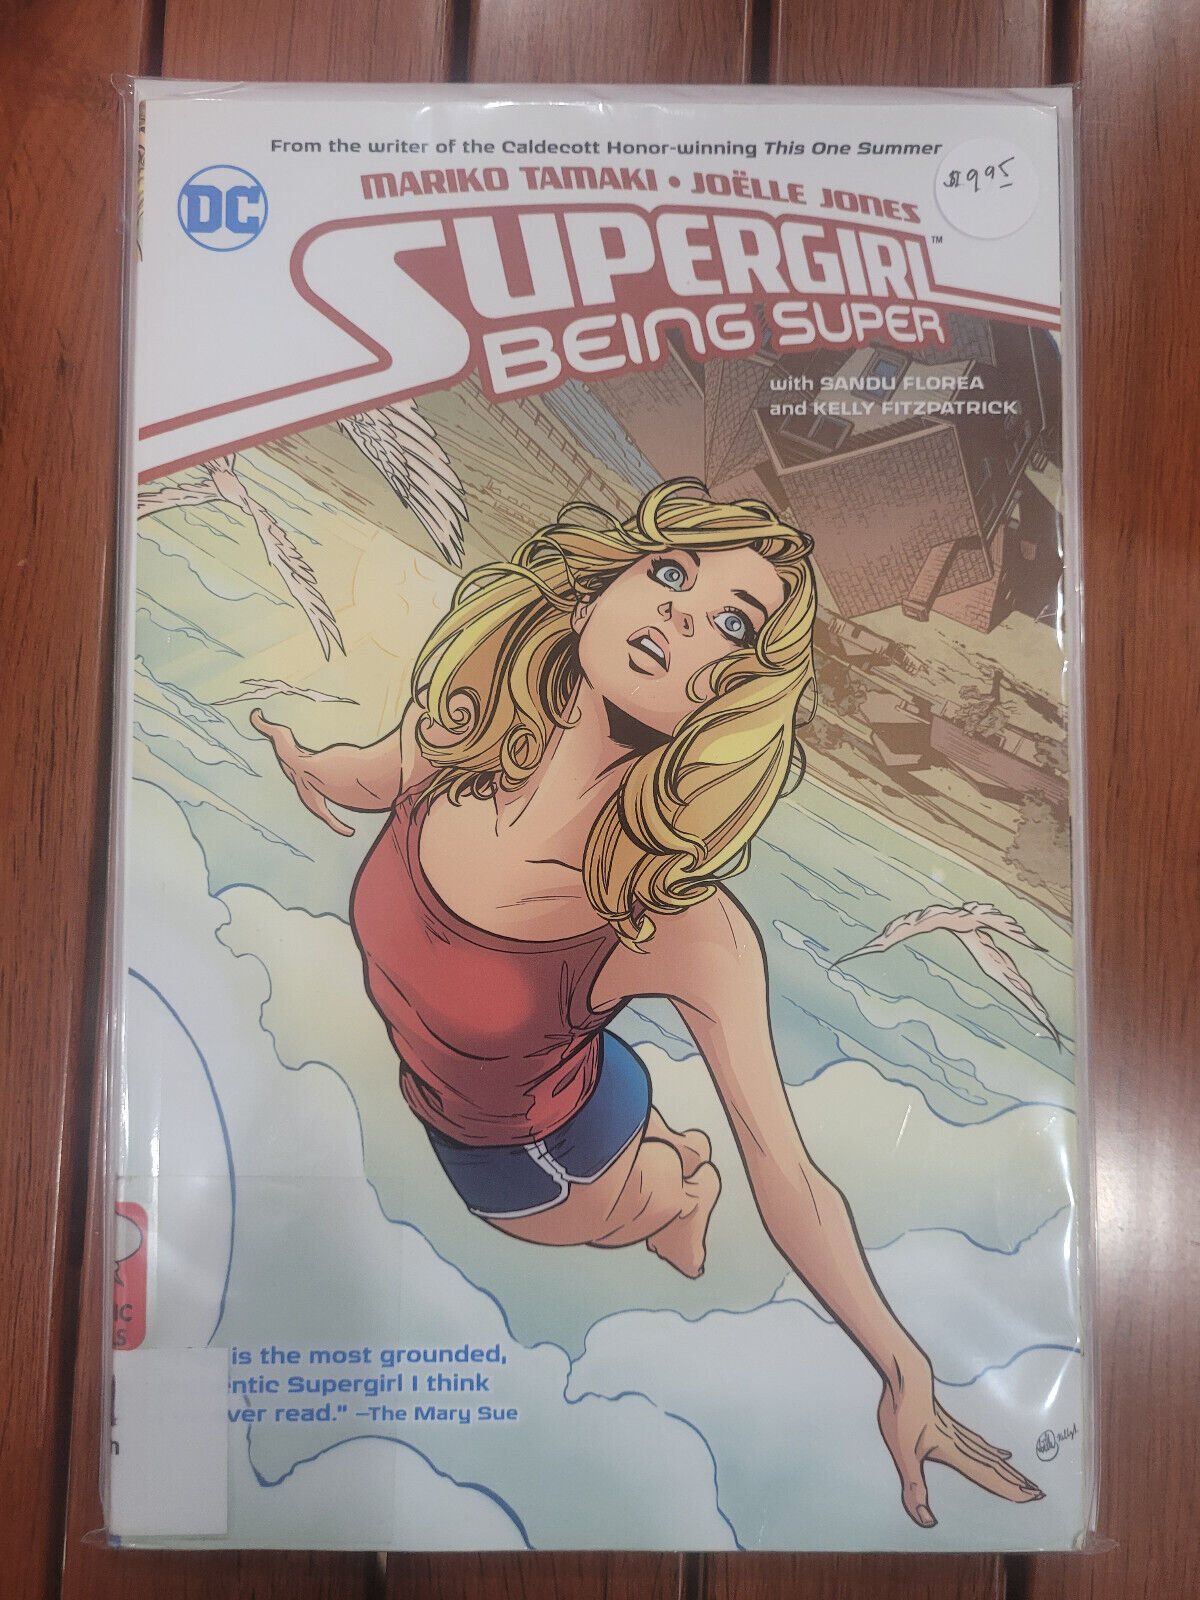 BRAND NEW DC Supergirl Being Super